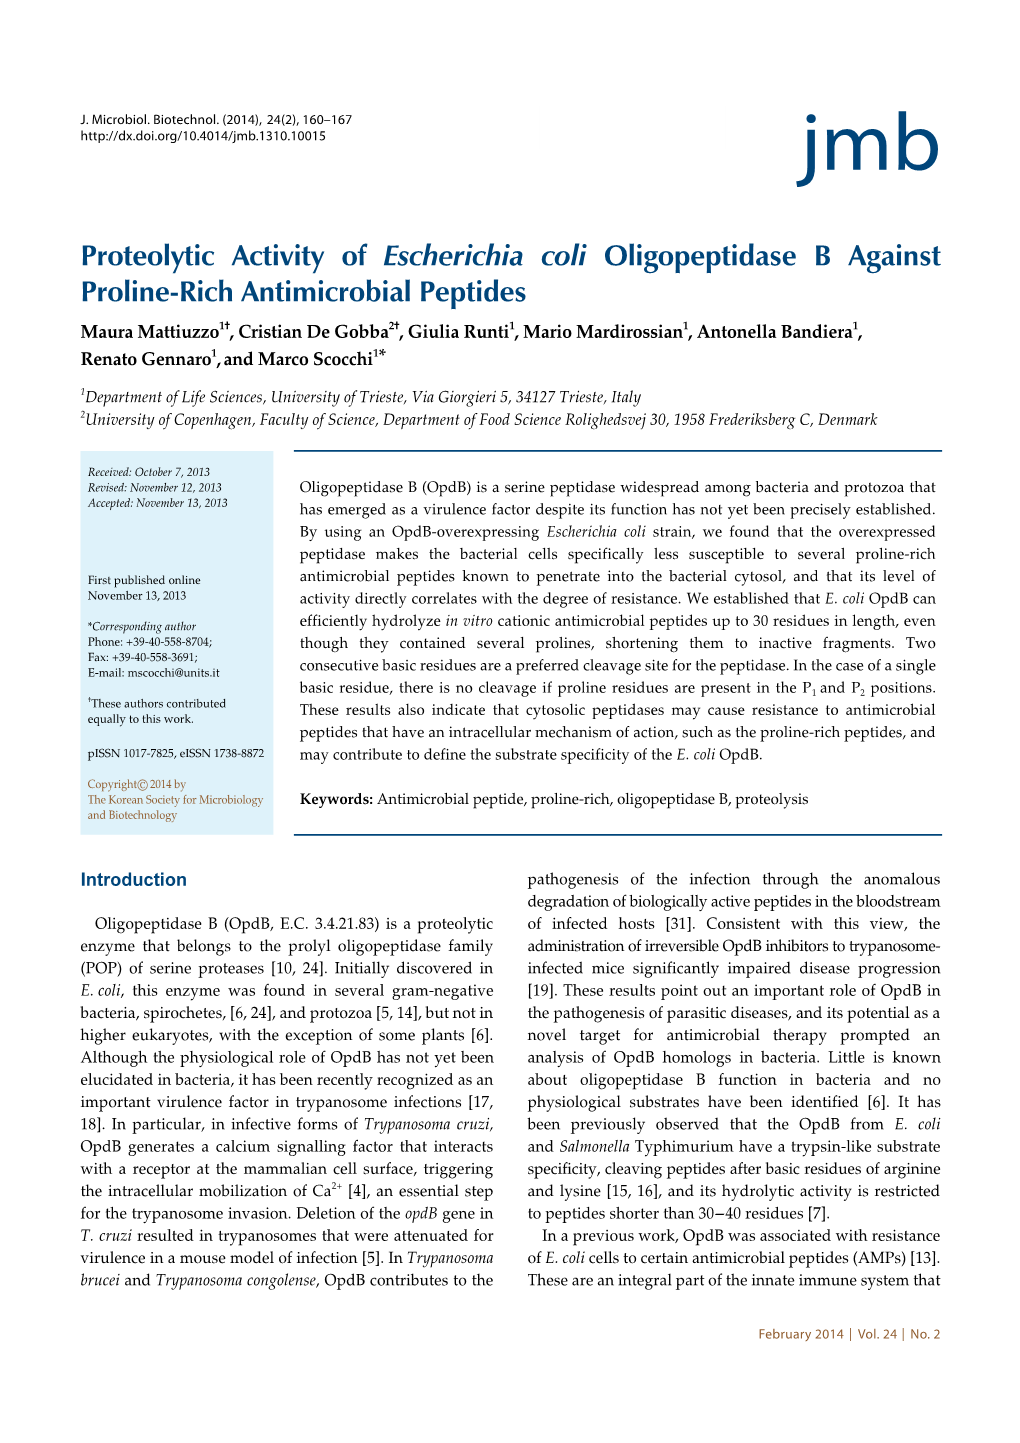 Proteolytic Activity of Escherichia Coli Oligopeptidase B Against Proline